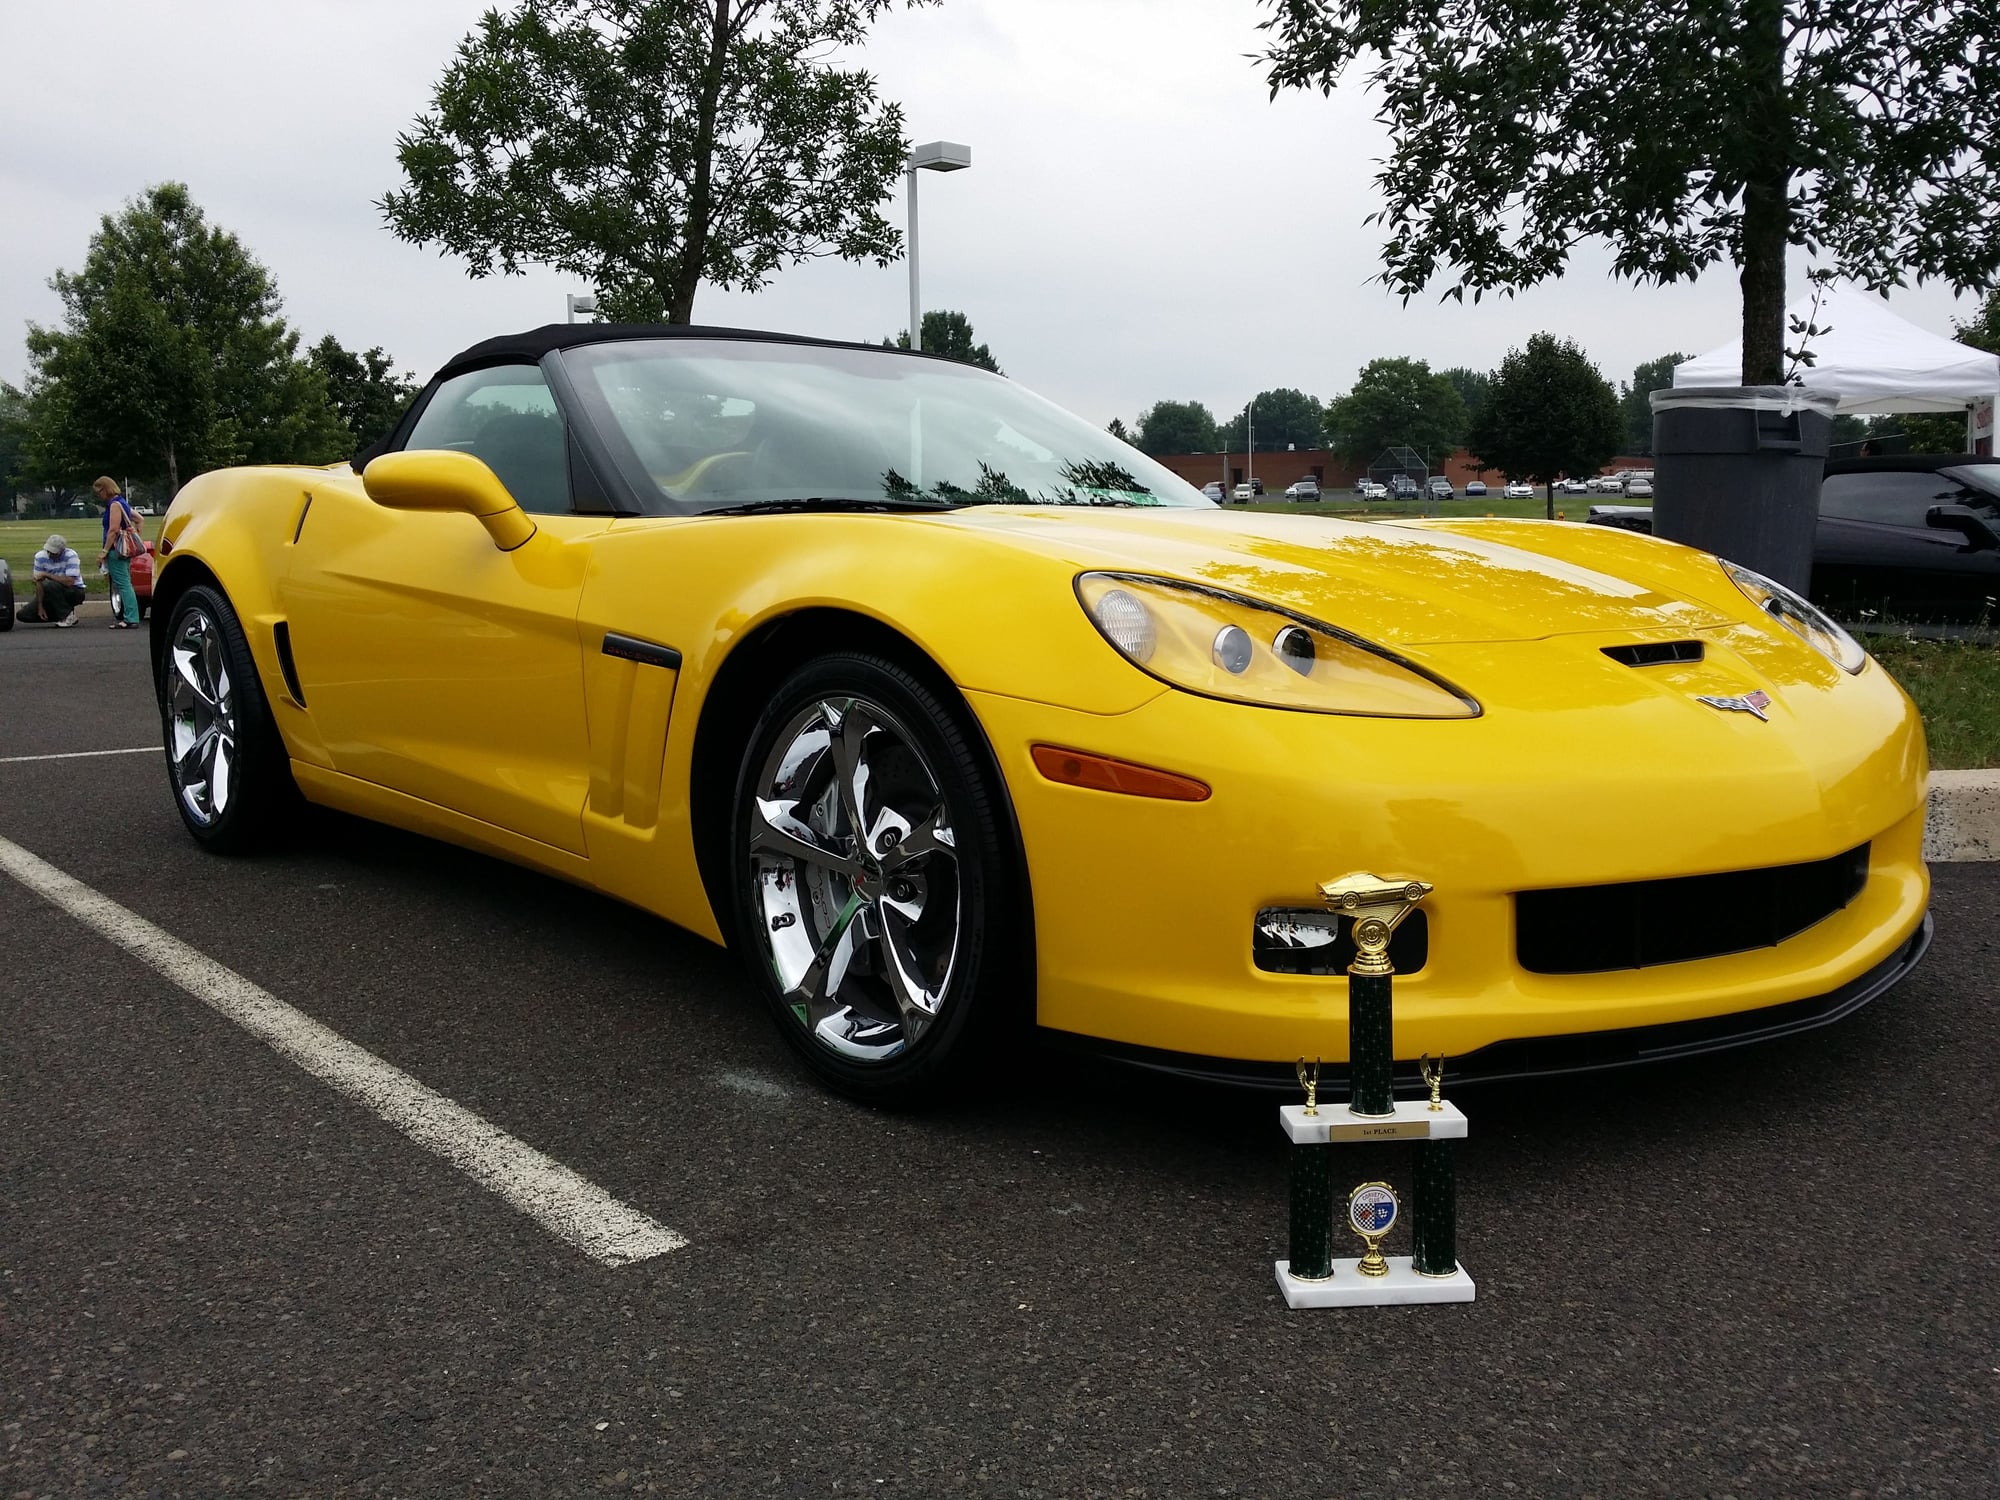 My Video of the Cavalcade of Corvettes Show in Hatboro PA